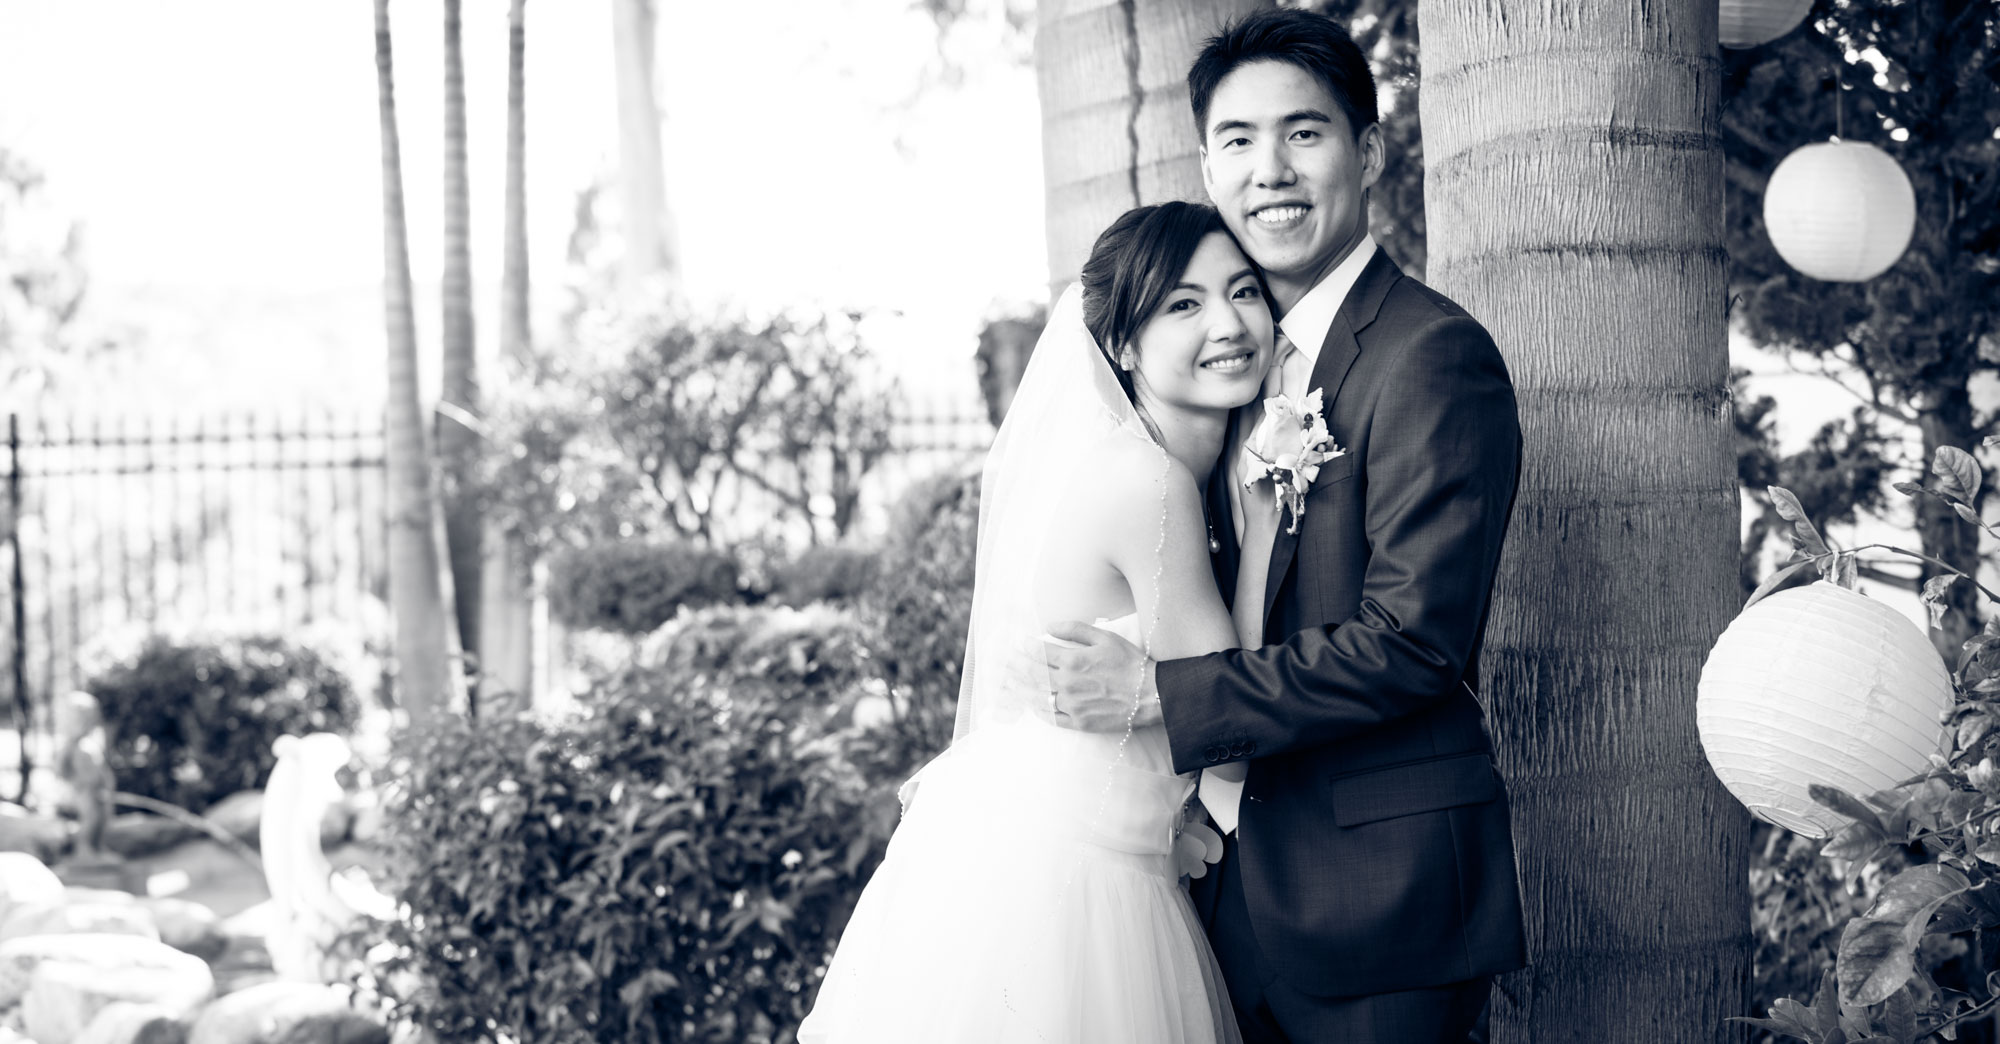 Sophia & Joey’s Backyard Wedding – Los Angeles DIY Wedding featured slider image